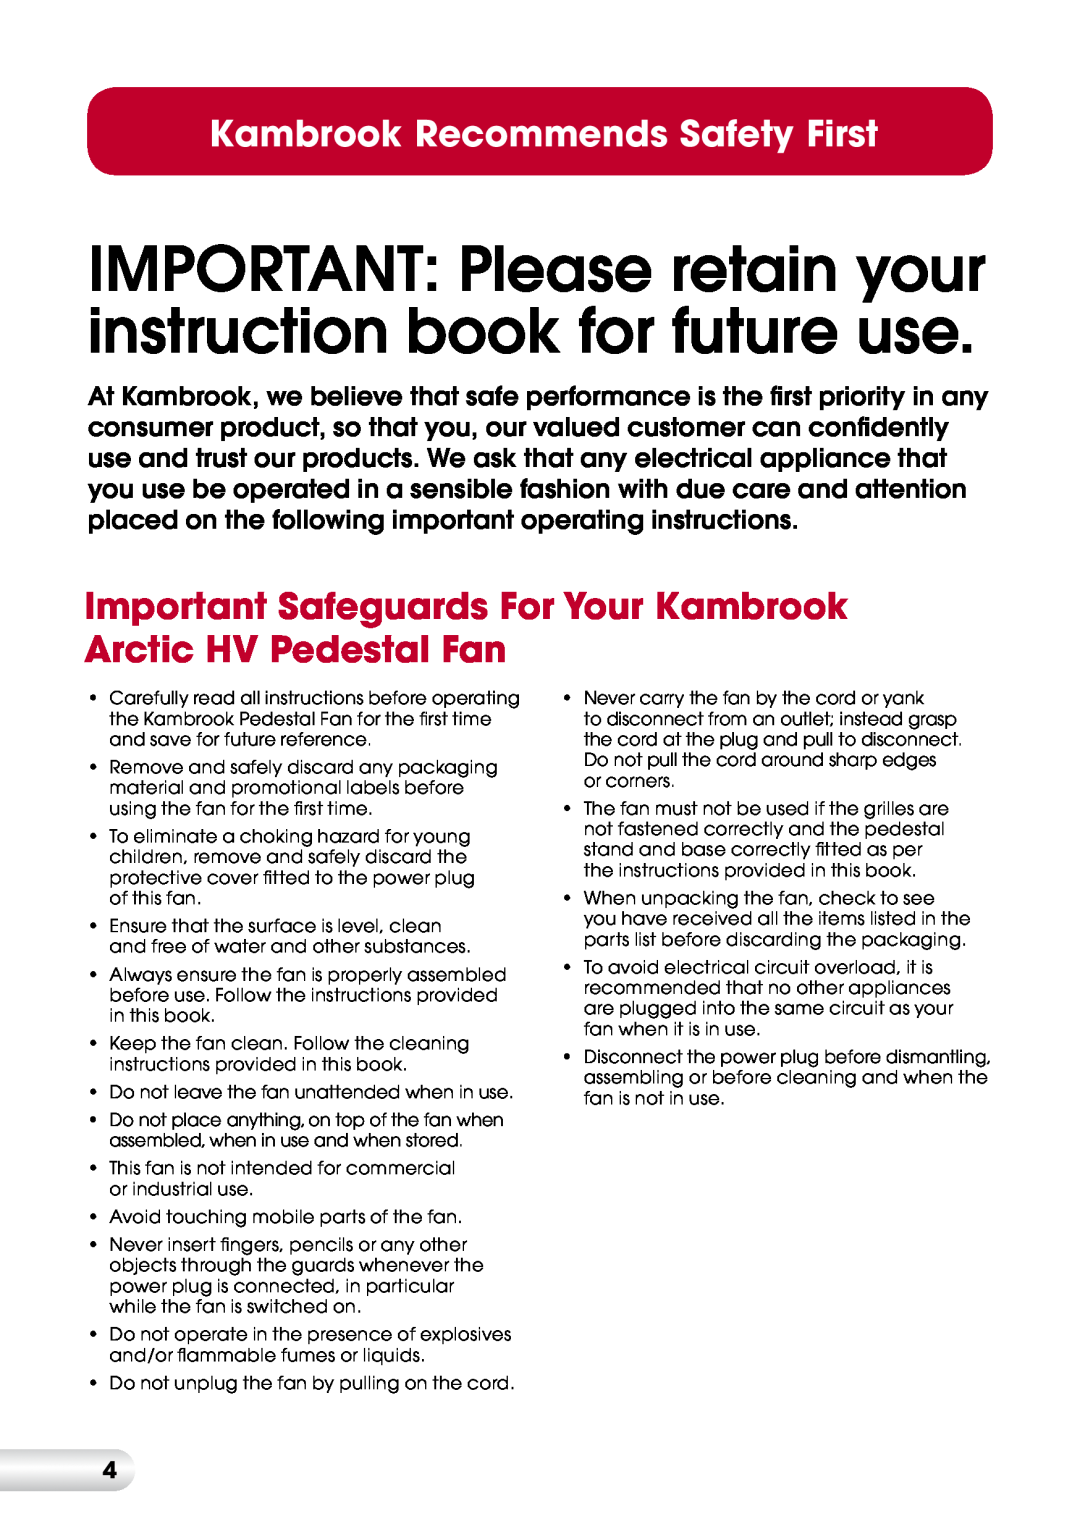 Kambrook KFA423 manual Kambrook Recommends Safety First 